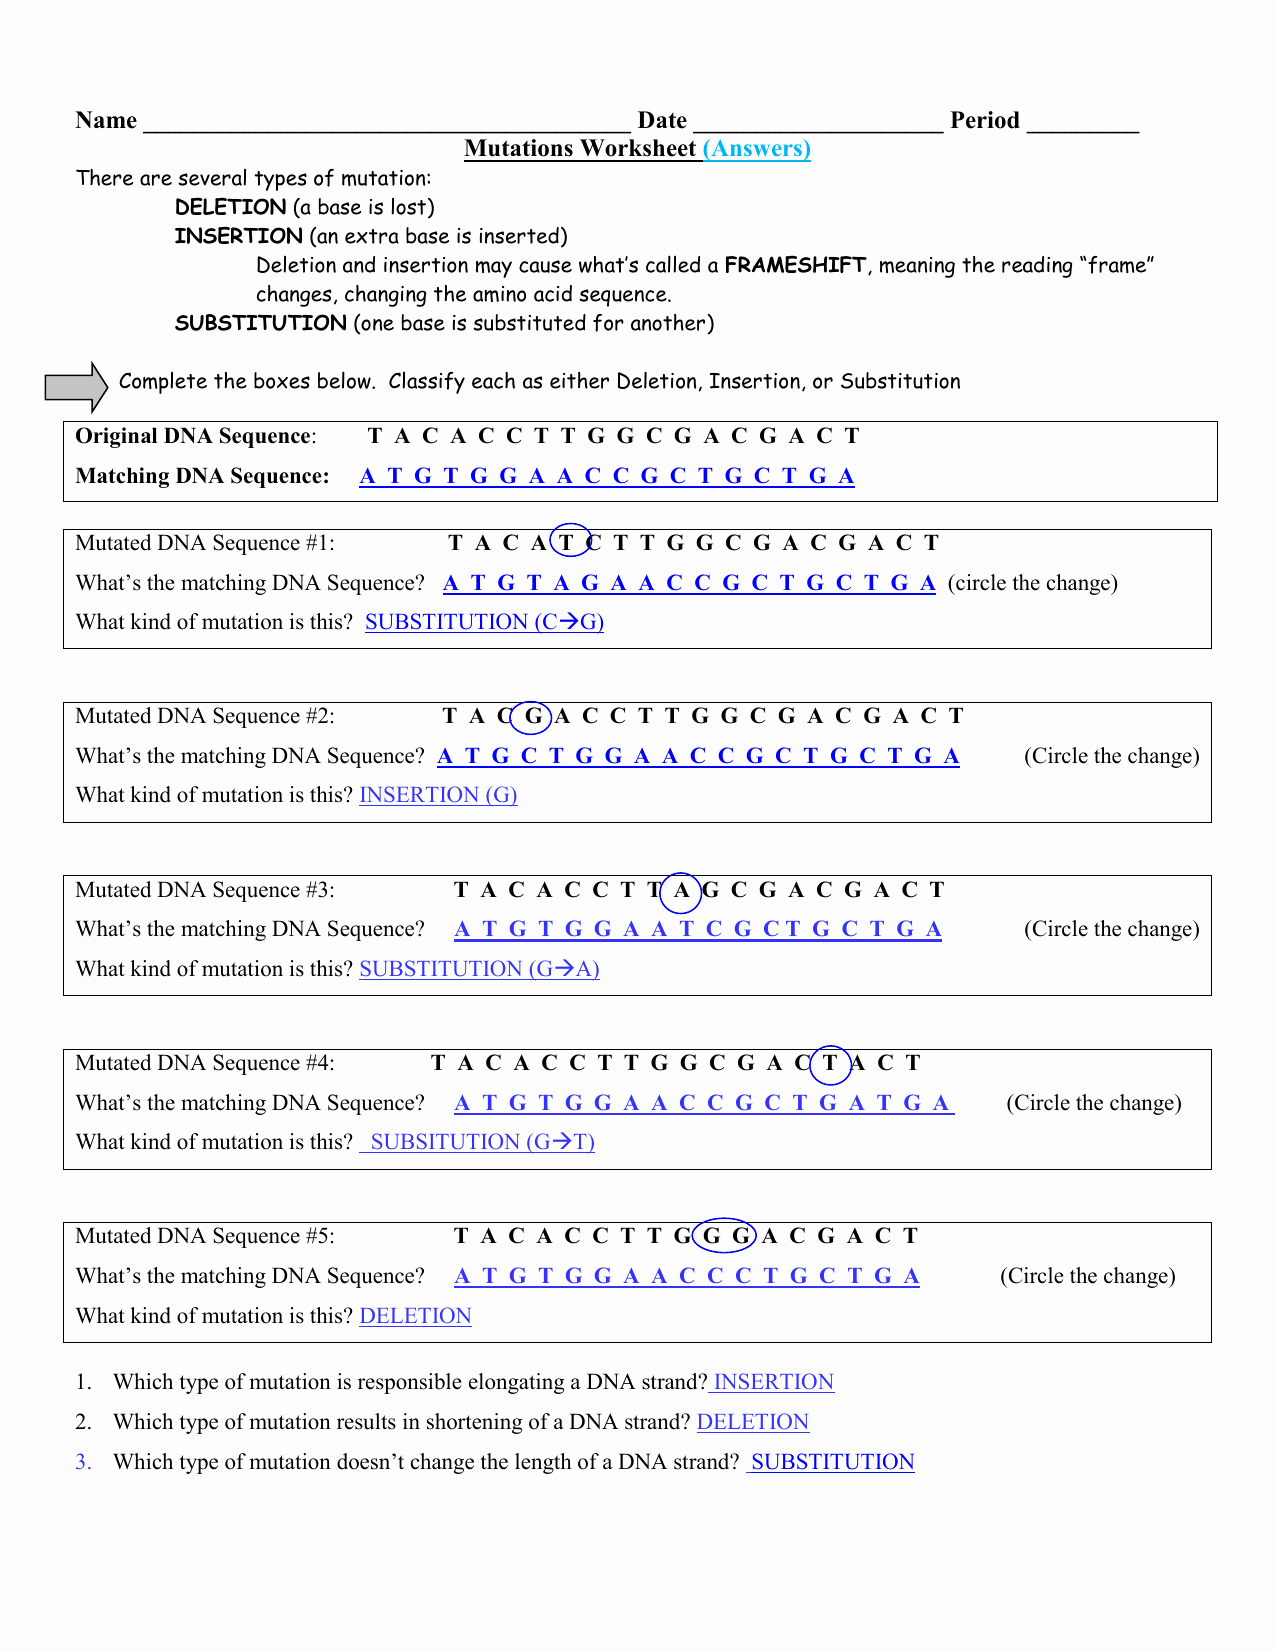 Mutations Worksheet Answer Key Inspirational Worksheet Types Mutations Worksheet Grass Fedjp